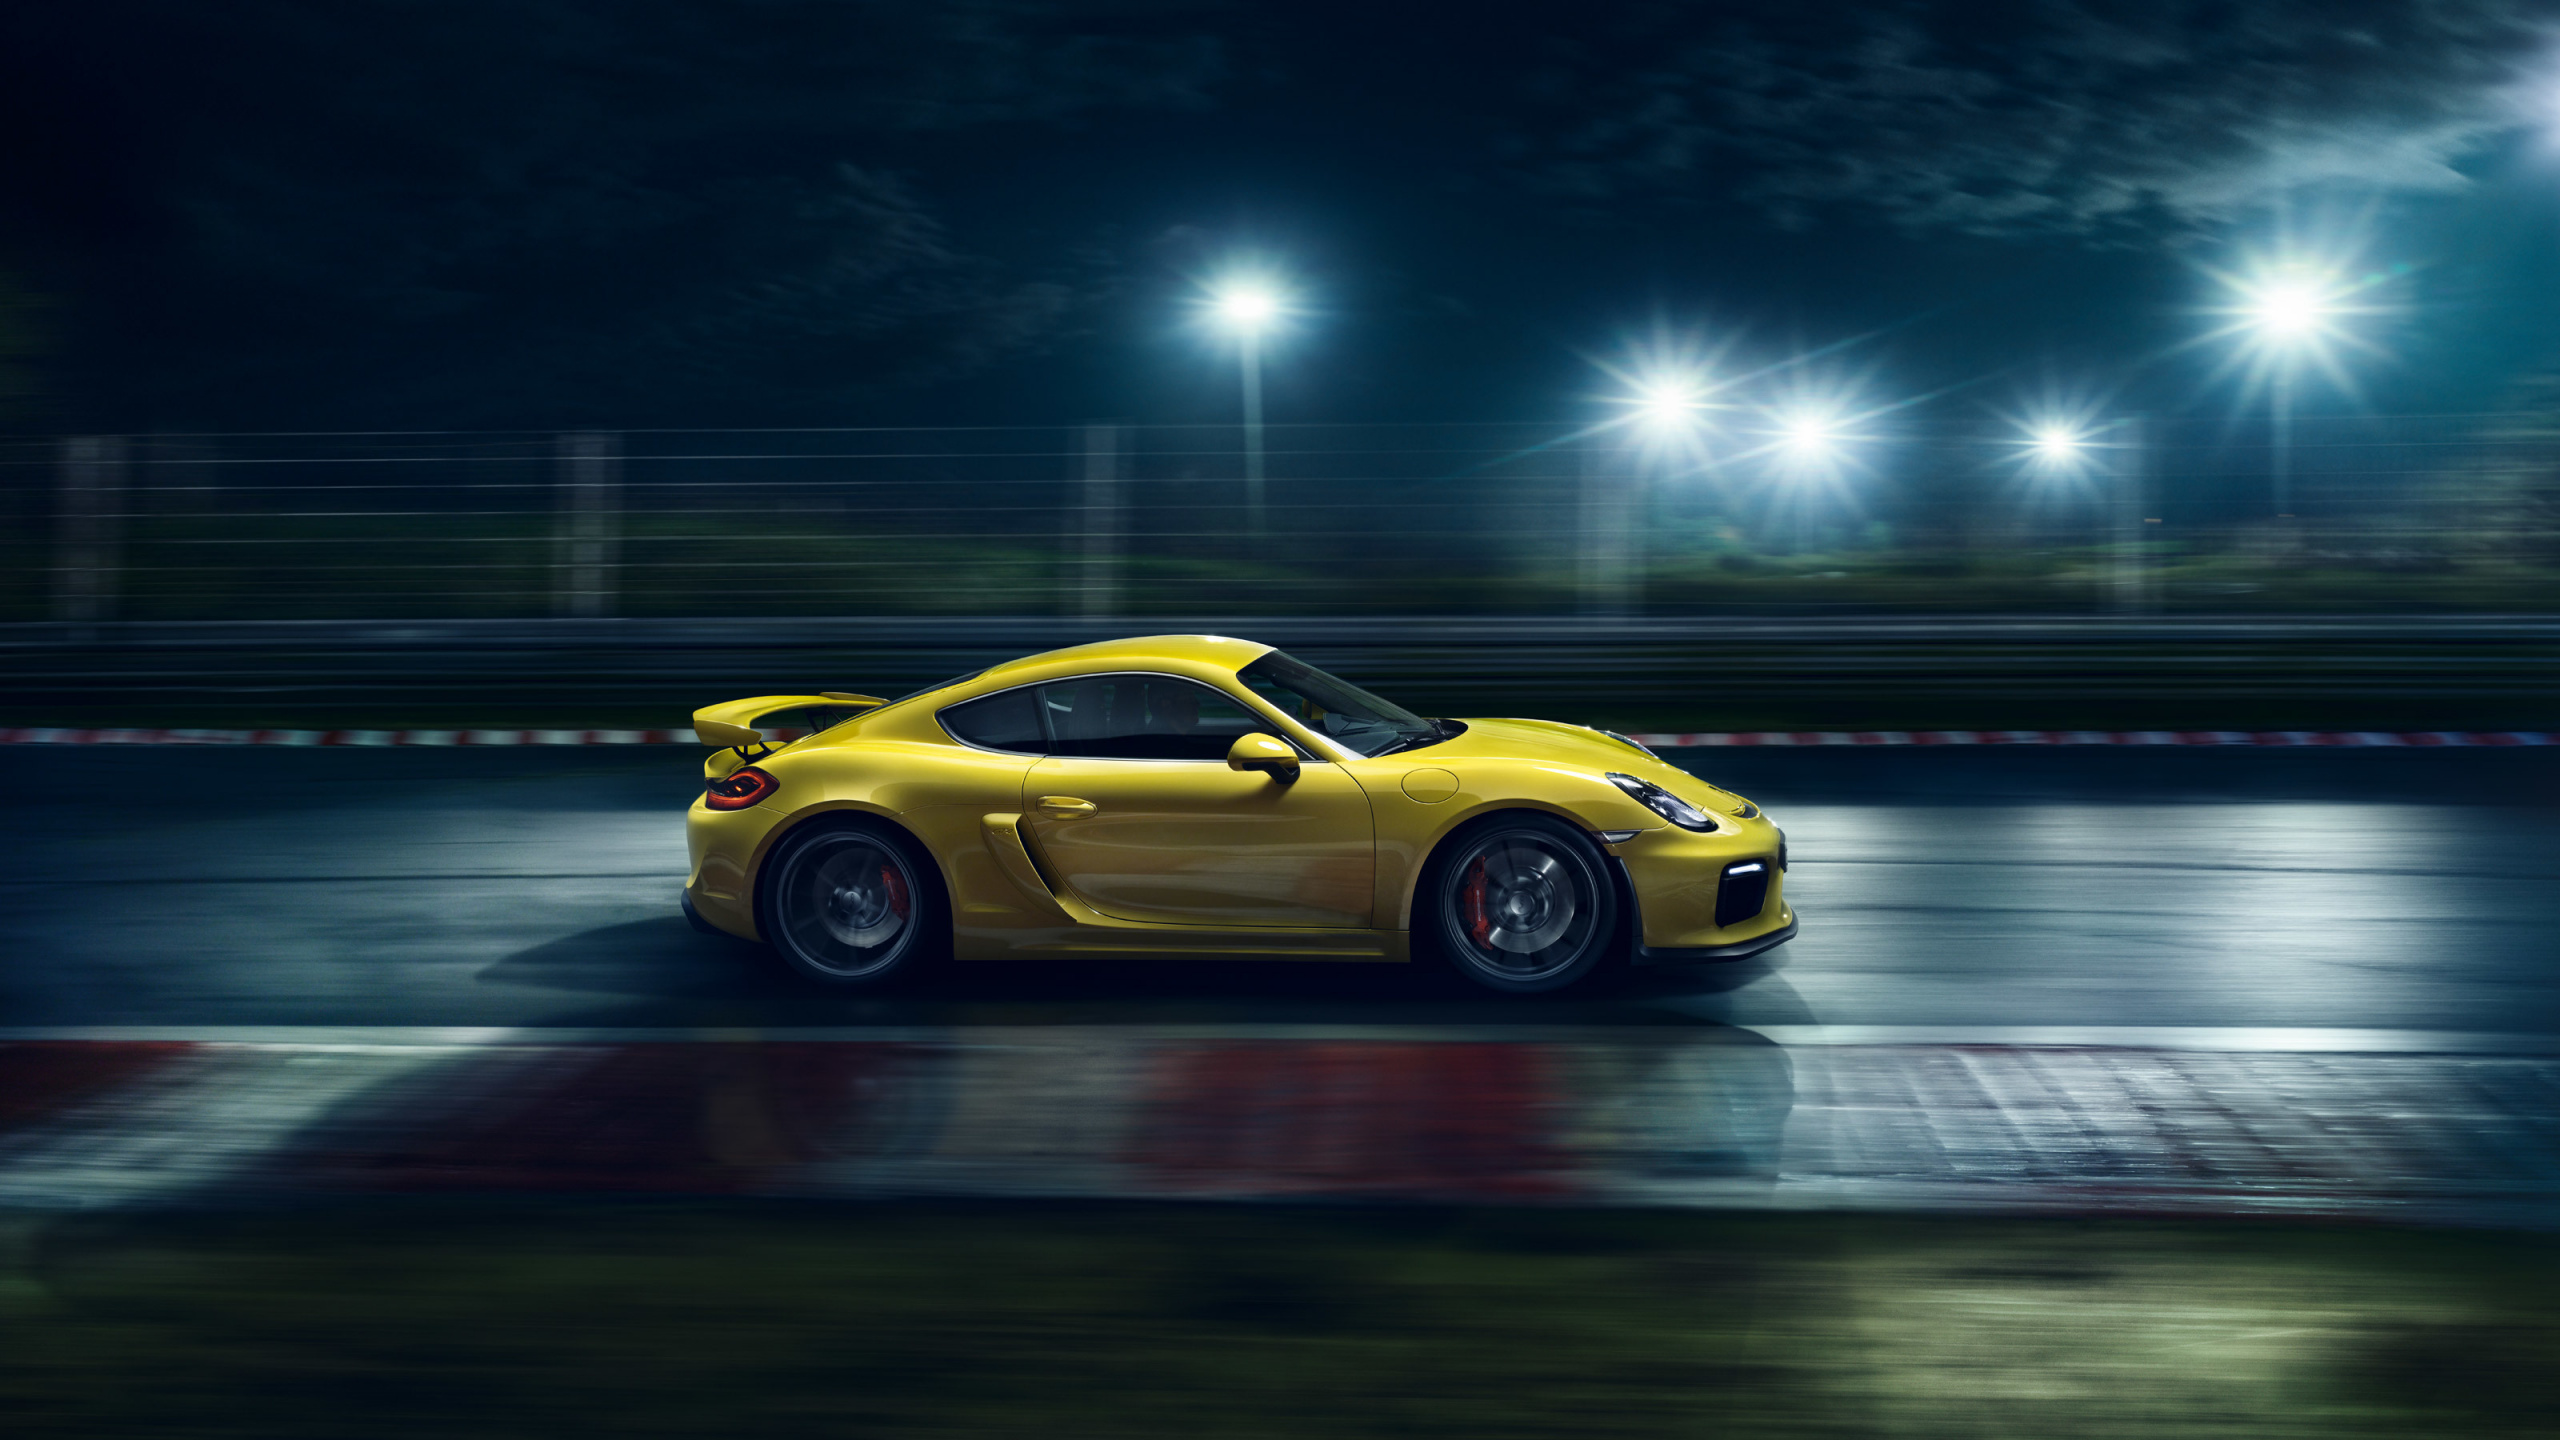 Porsche 911 Amarillo en la Carretera Por la Noche. Wallpaper in 2560x1440 Resolution